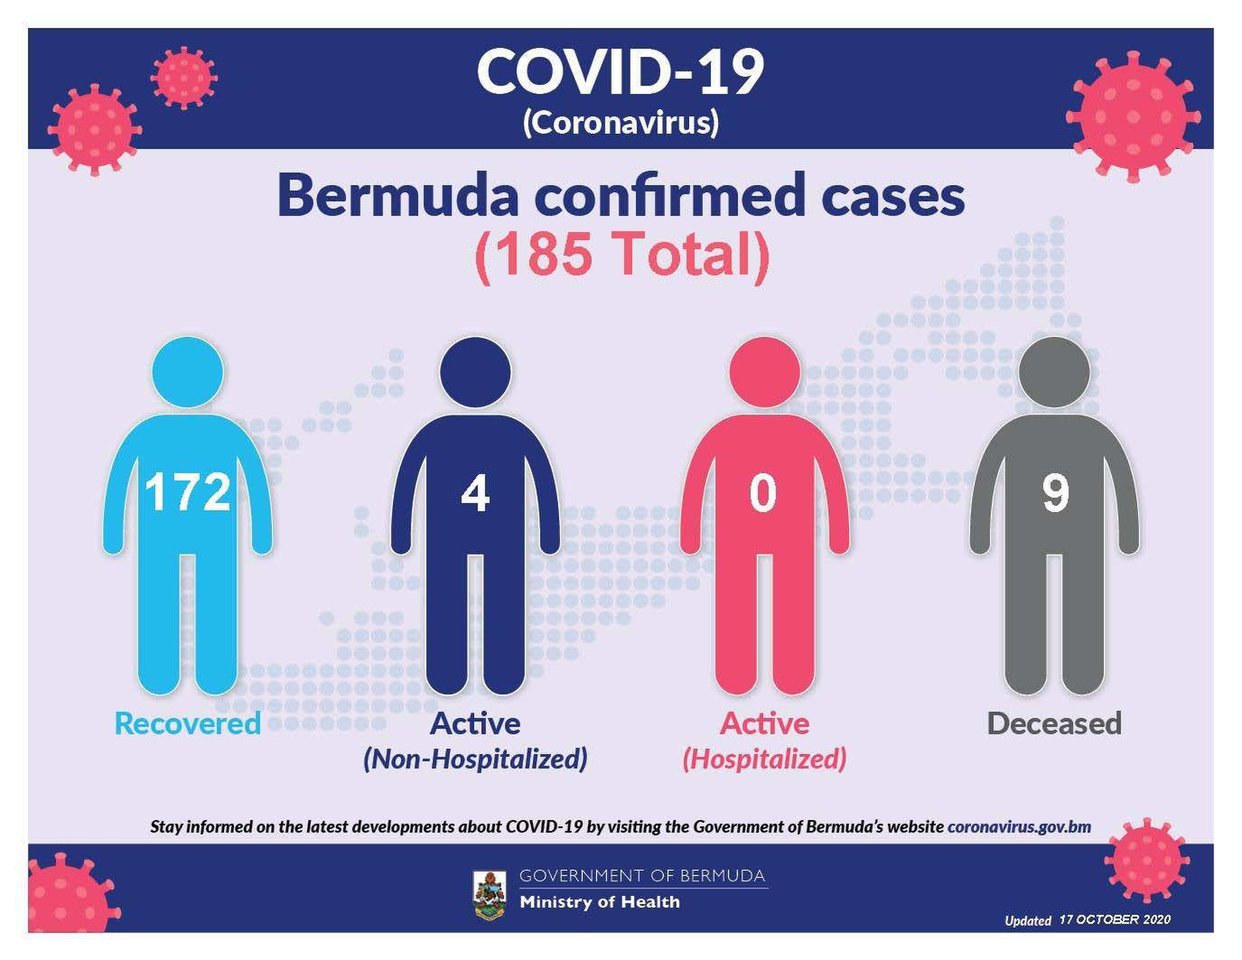 No new COVID-19 cases reported in Bermuda, 19 October